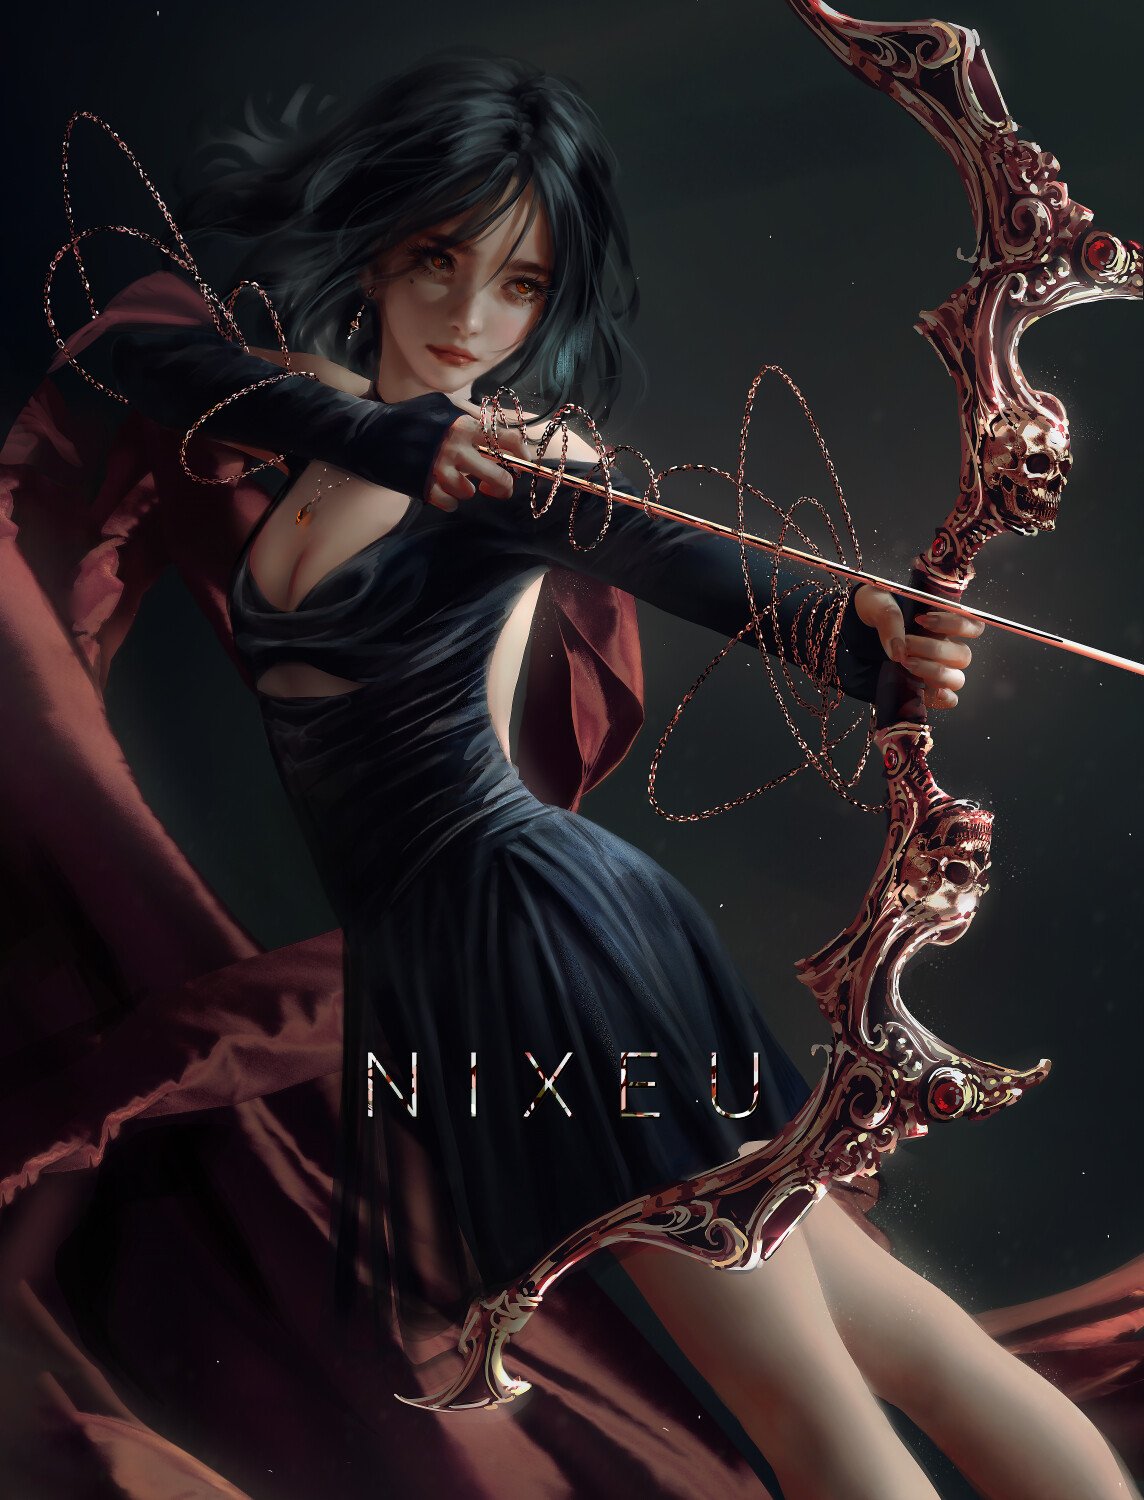 General 1144x1500 Nixeu drawing women dark hair red eyes dress black clothing jewelry ruby bow arrows fighting archer fantasy art